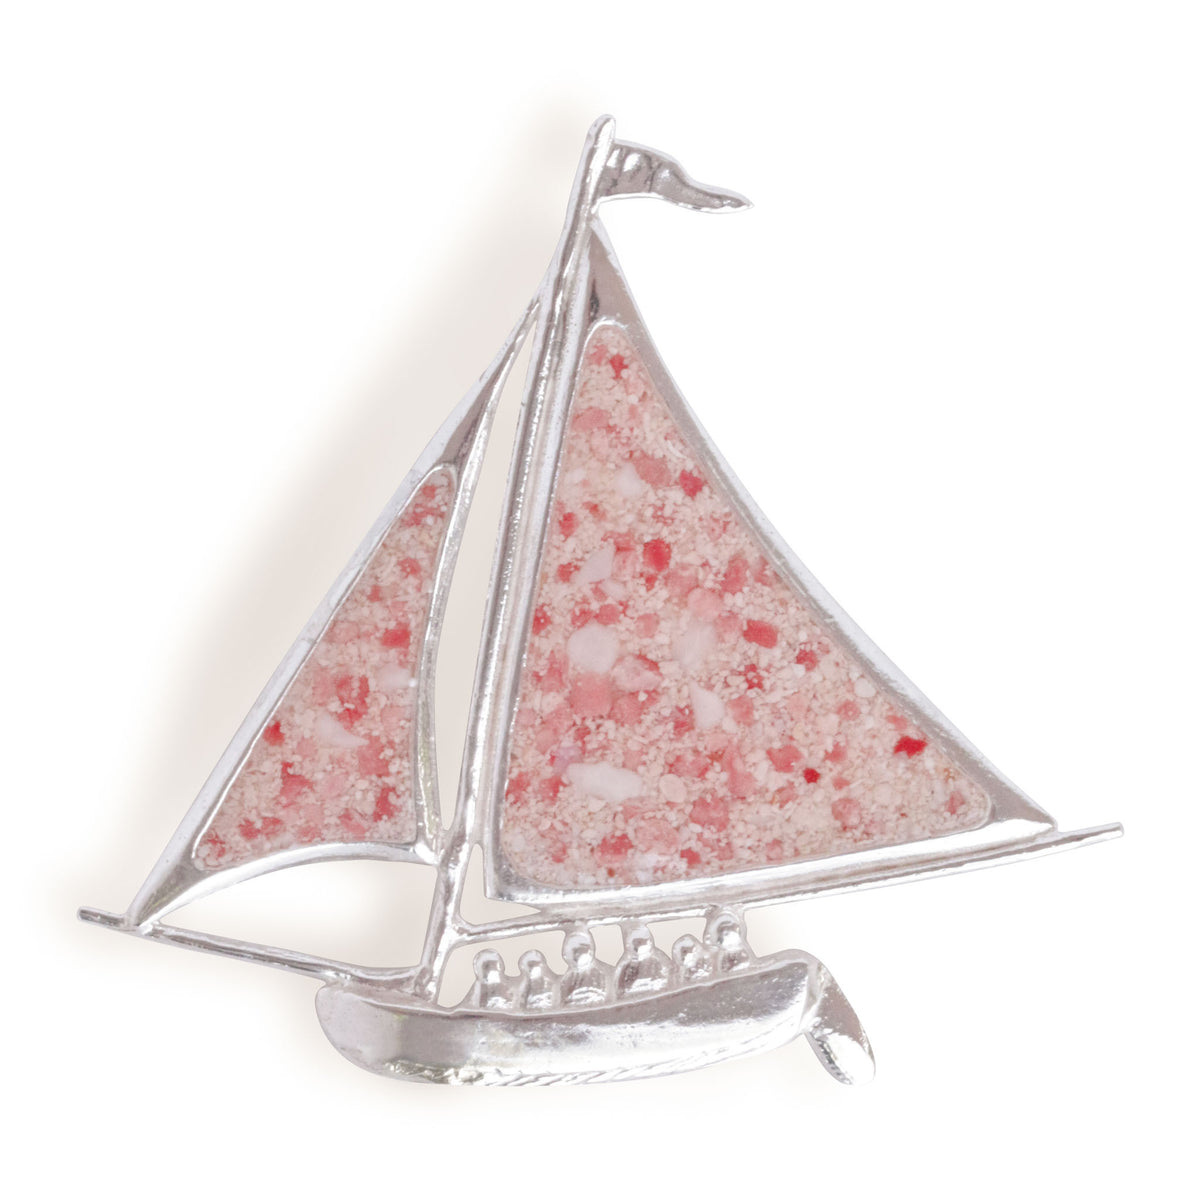 Nautical ~ Bermuda Fitted Dinghy 2015 Ornament / Pendant - Alexandra Mosher Studio Jewellery Bermuda Fine